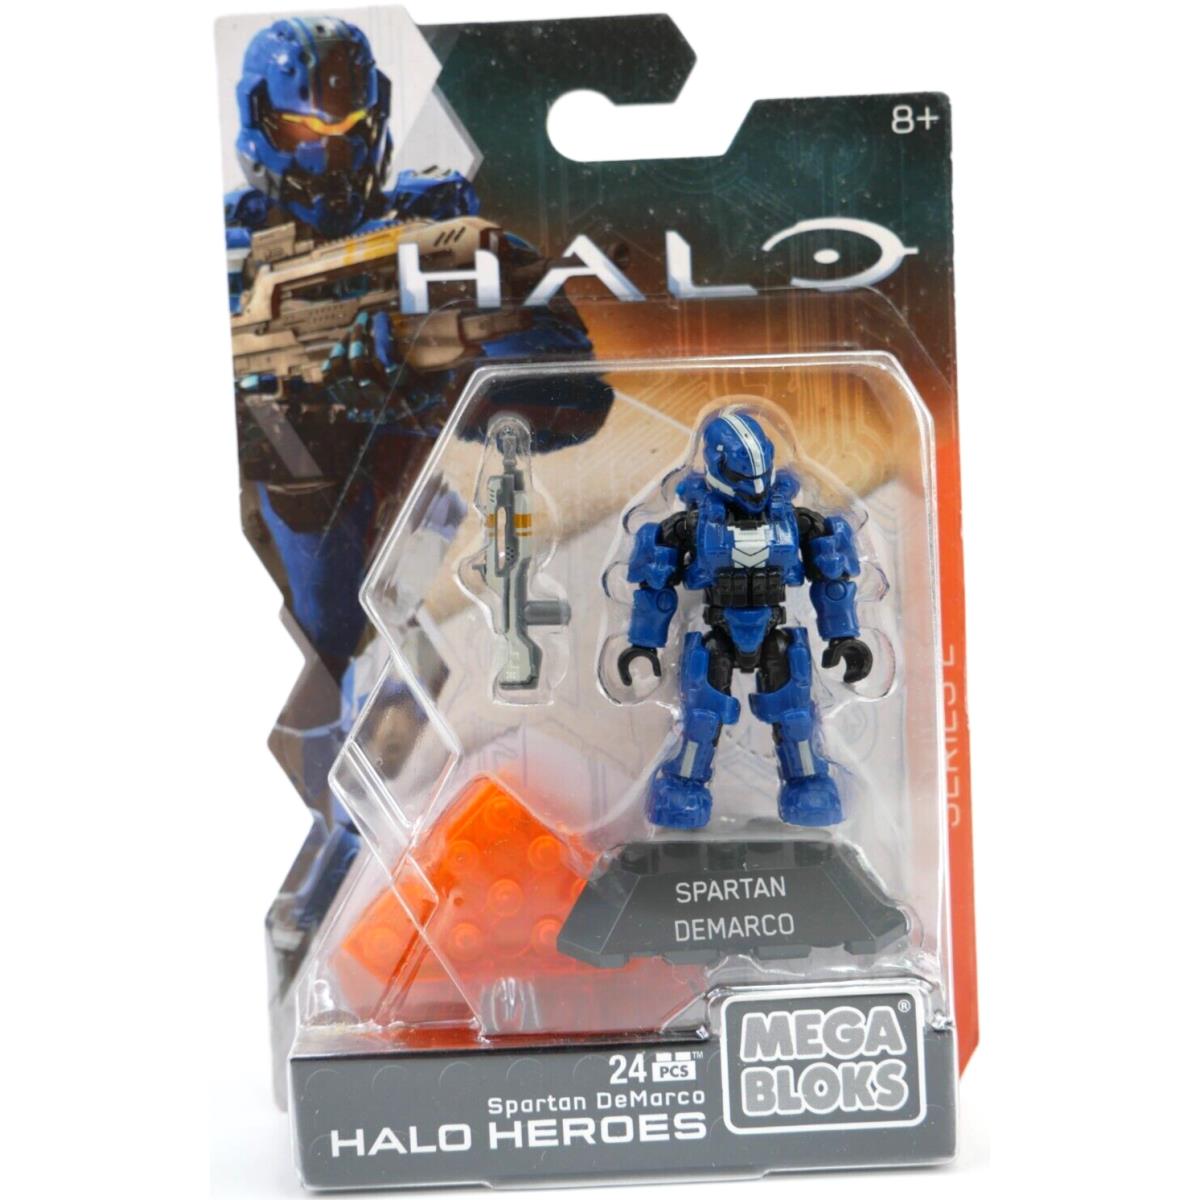 Halo Heroes Spartan Demarco 2015 Series 2 Mini Figure Mega Bloks / Mega Construx